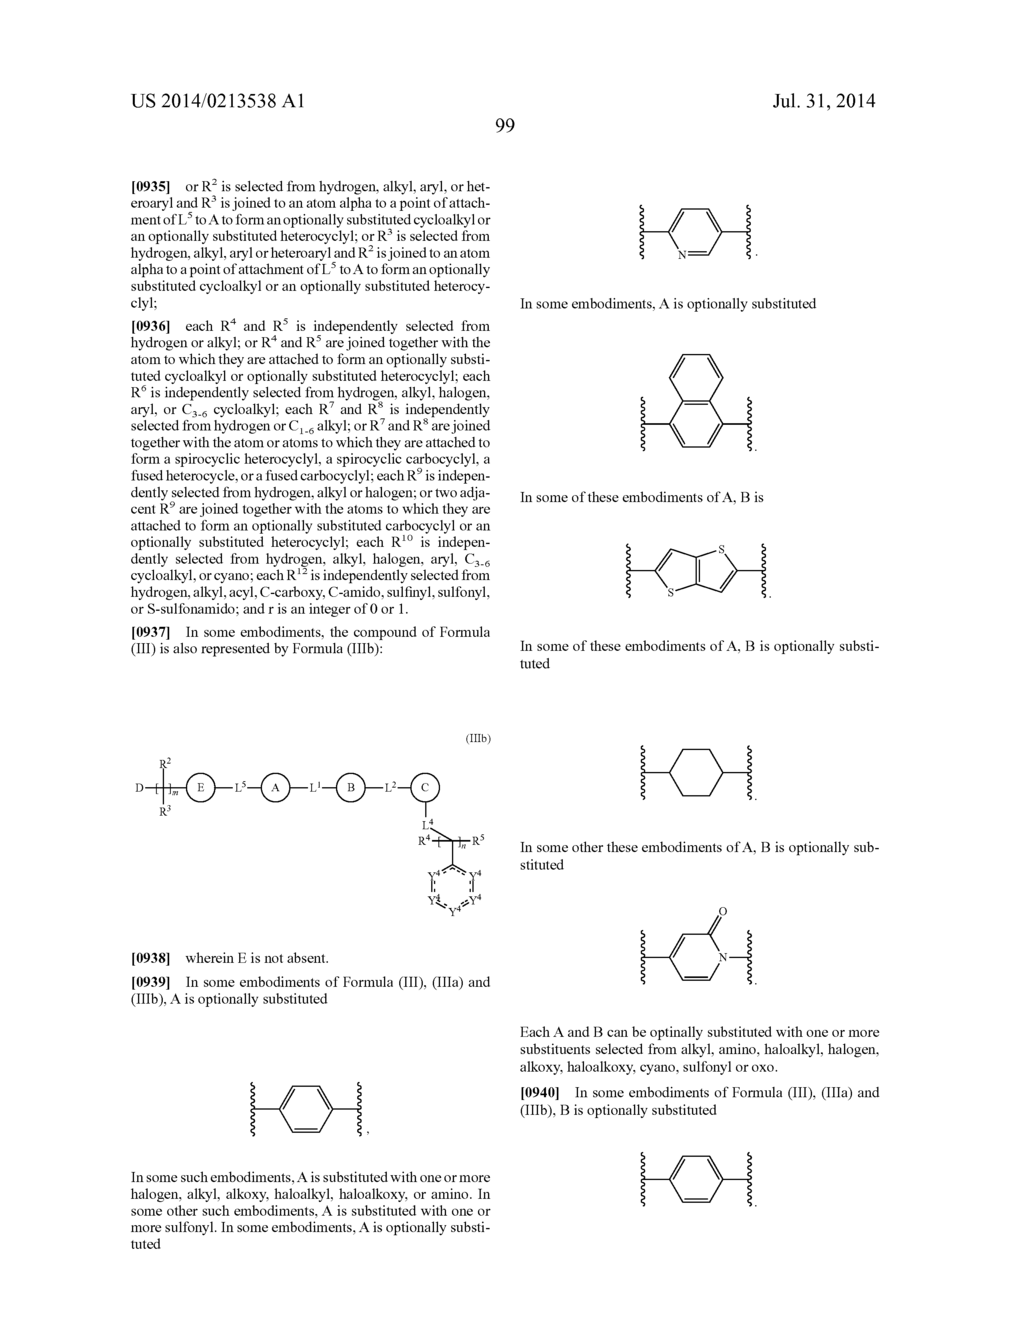 LYSOPHOSPHATIDIC ACID RECEPTOR ANTAGONISTS - diagram, schematic, and image 100